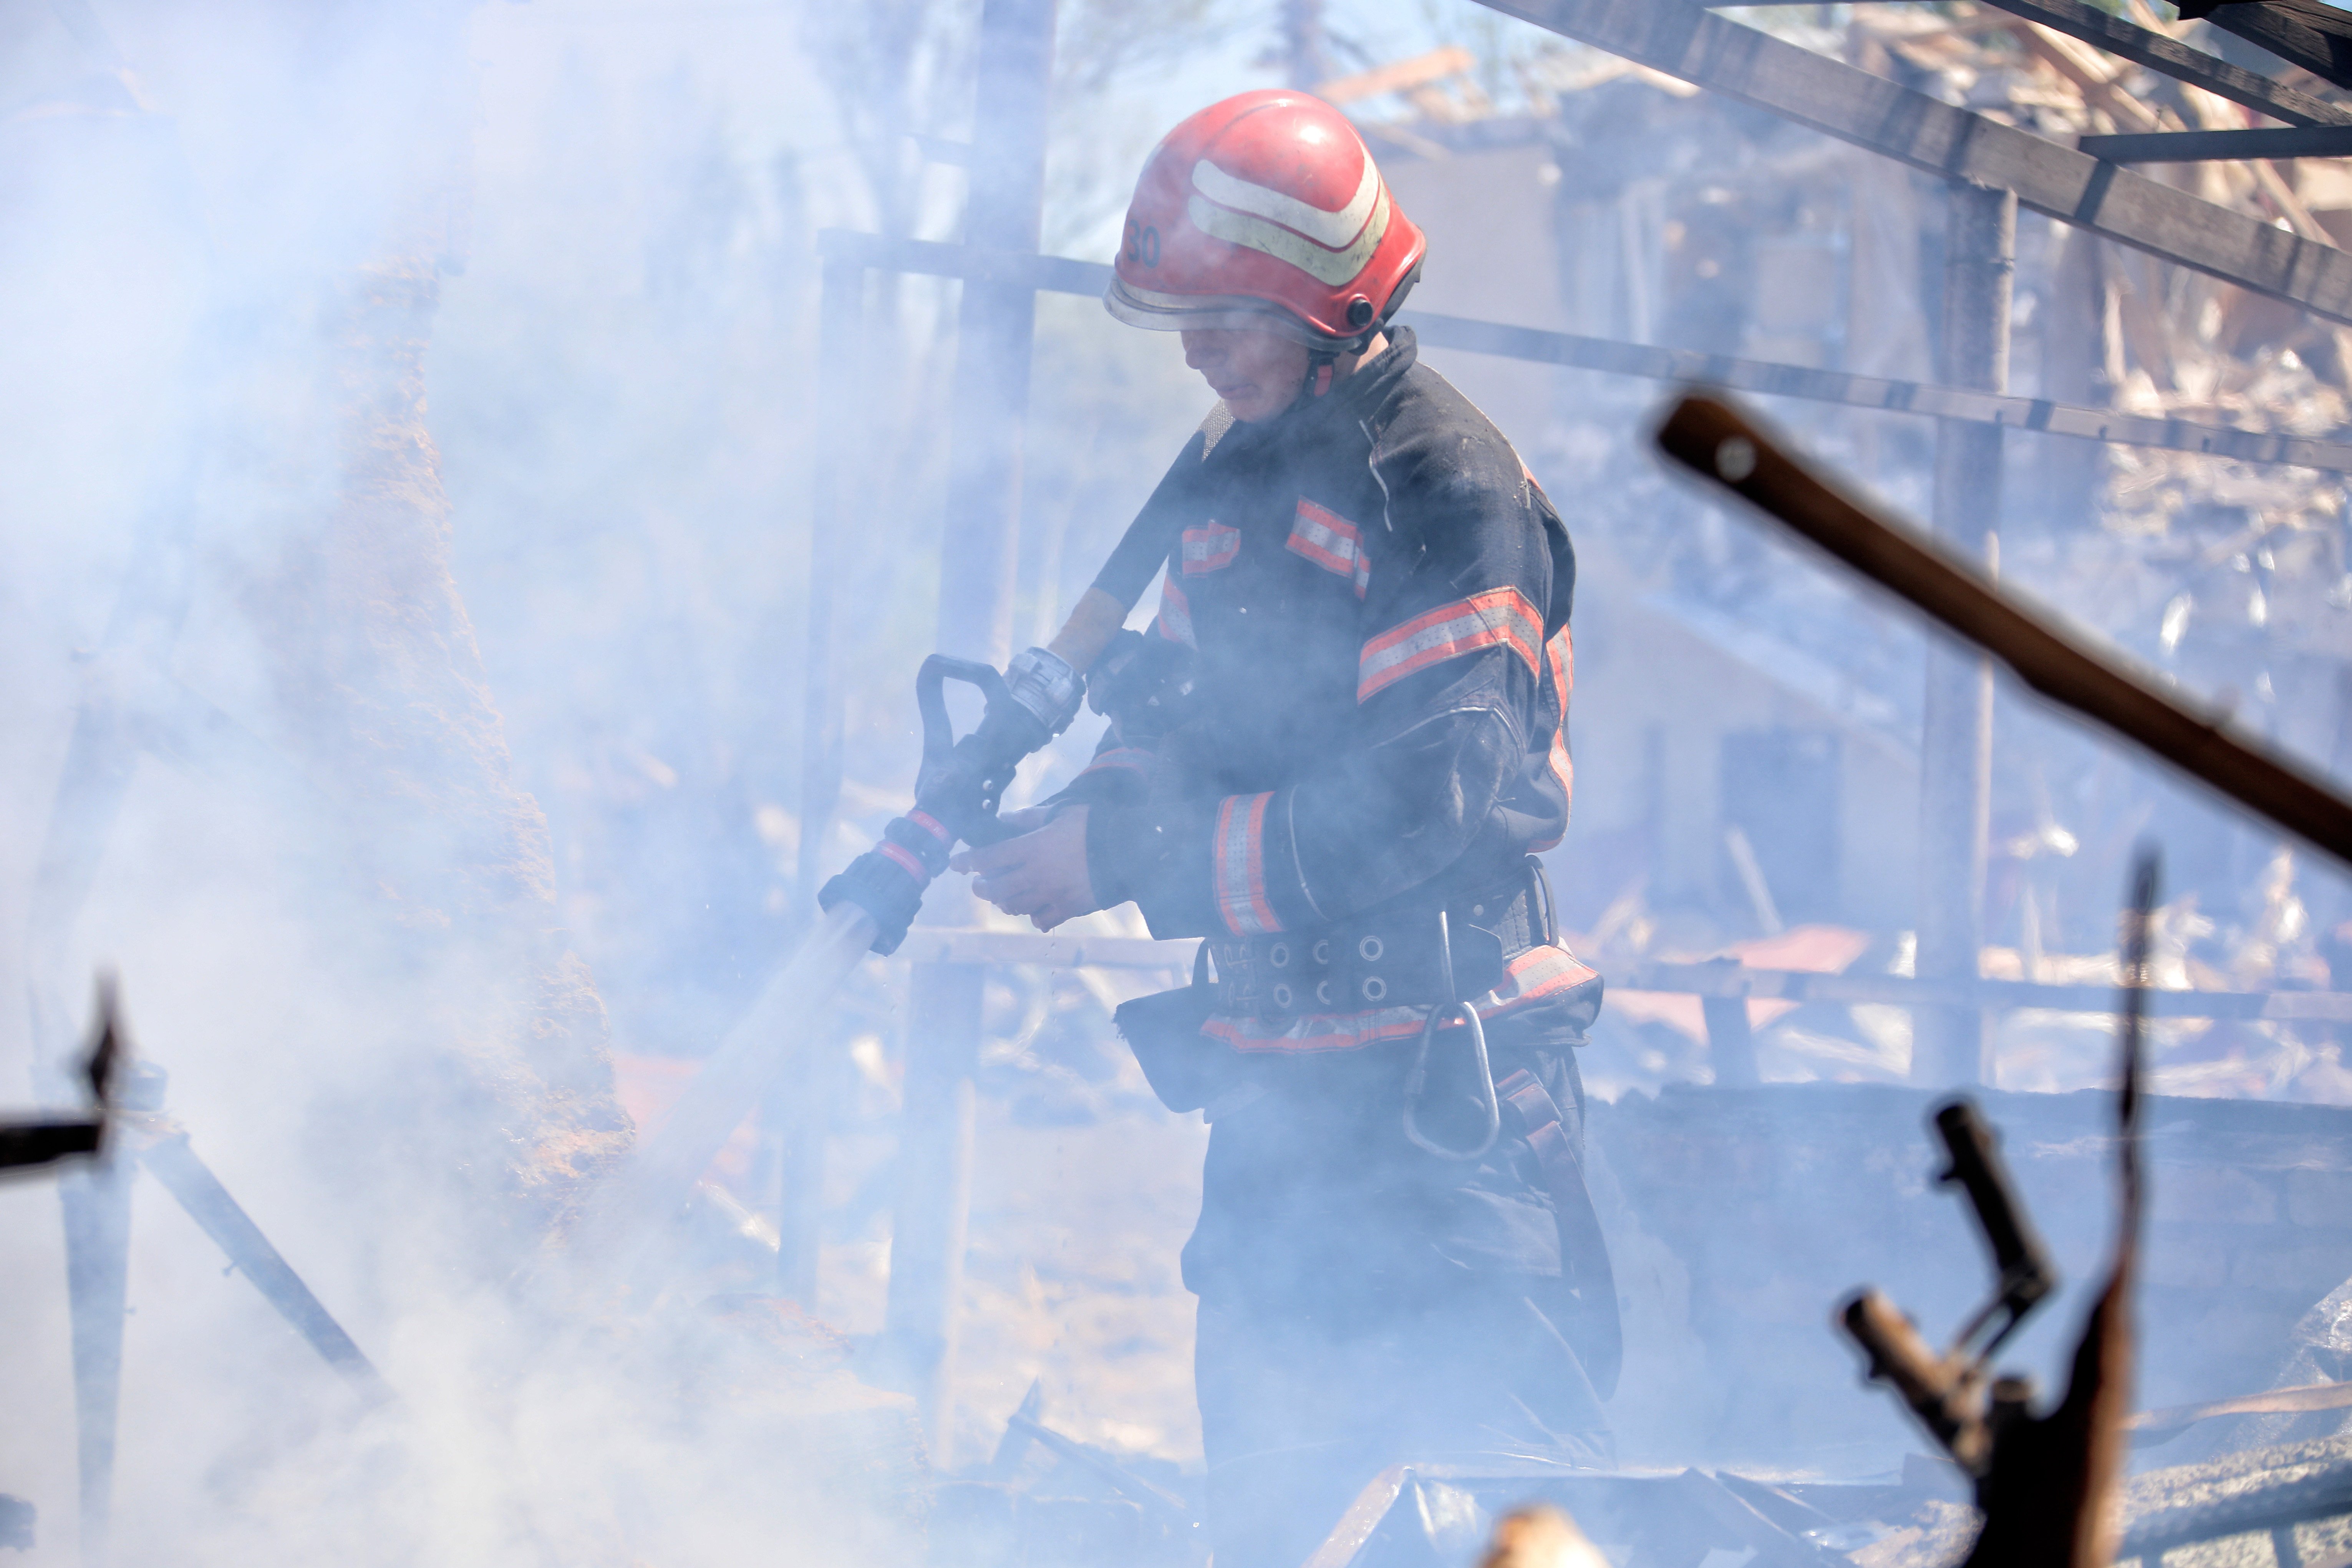 Atacs aeris contra Odessa: moren almenys tres persones